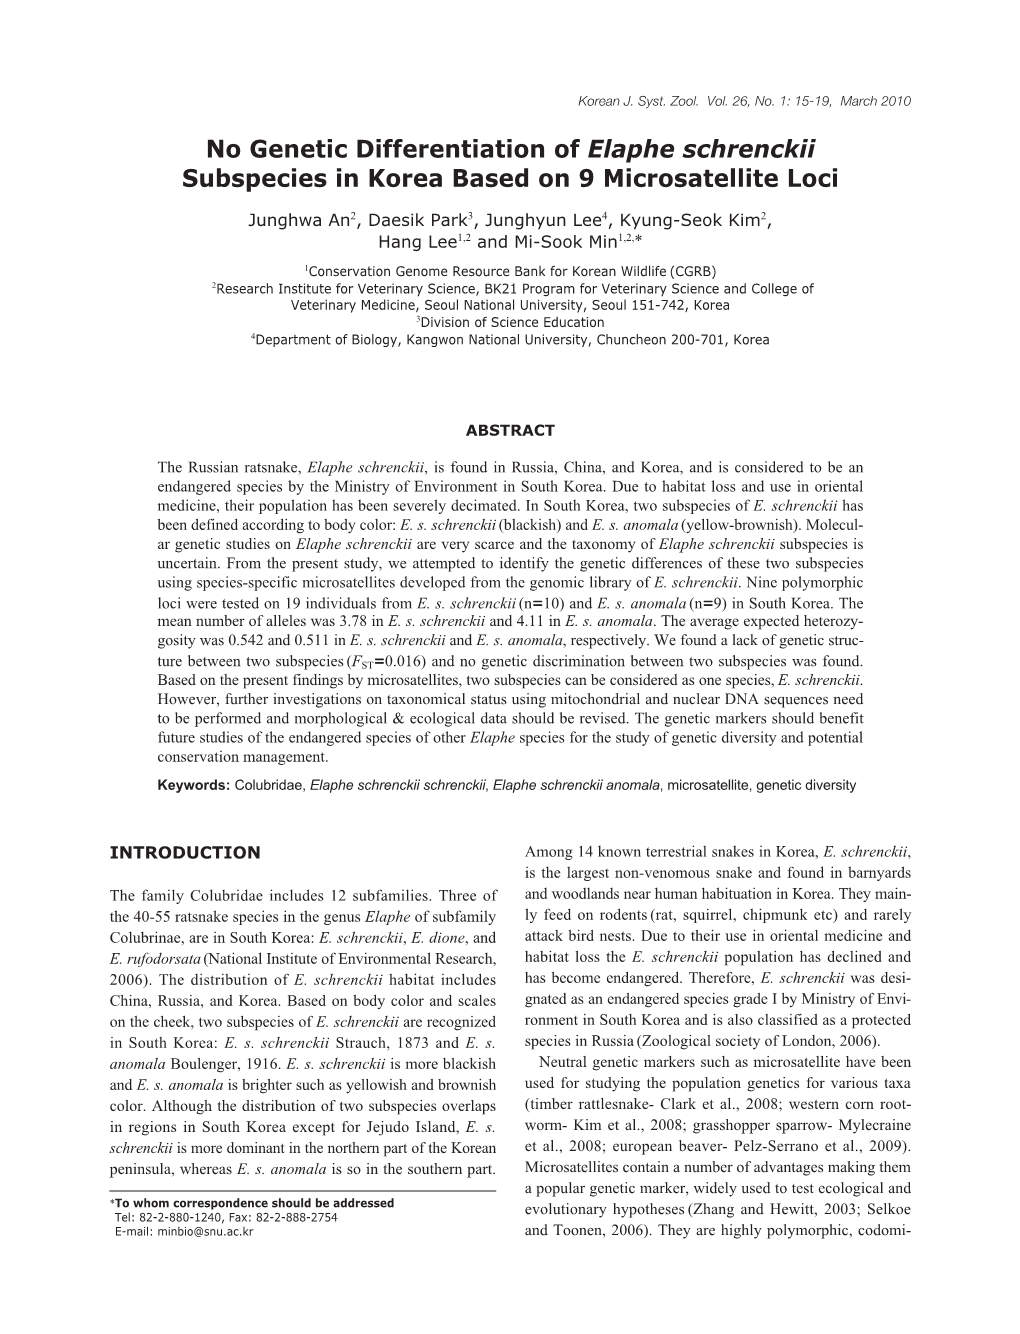 No Genetic Differentiation of Elaphe Schrenckii Subspecies in Korea Based on 9 Microsatellite Loci